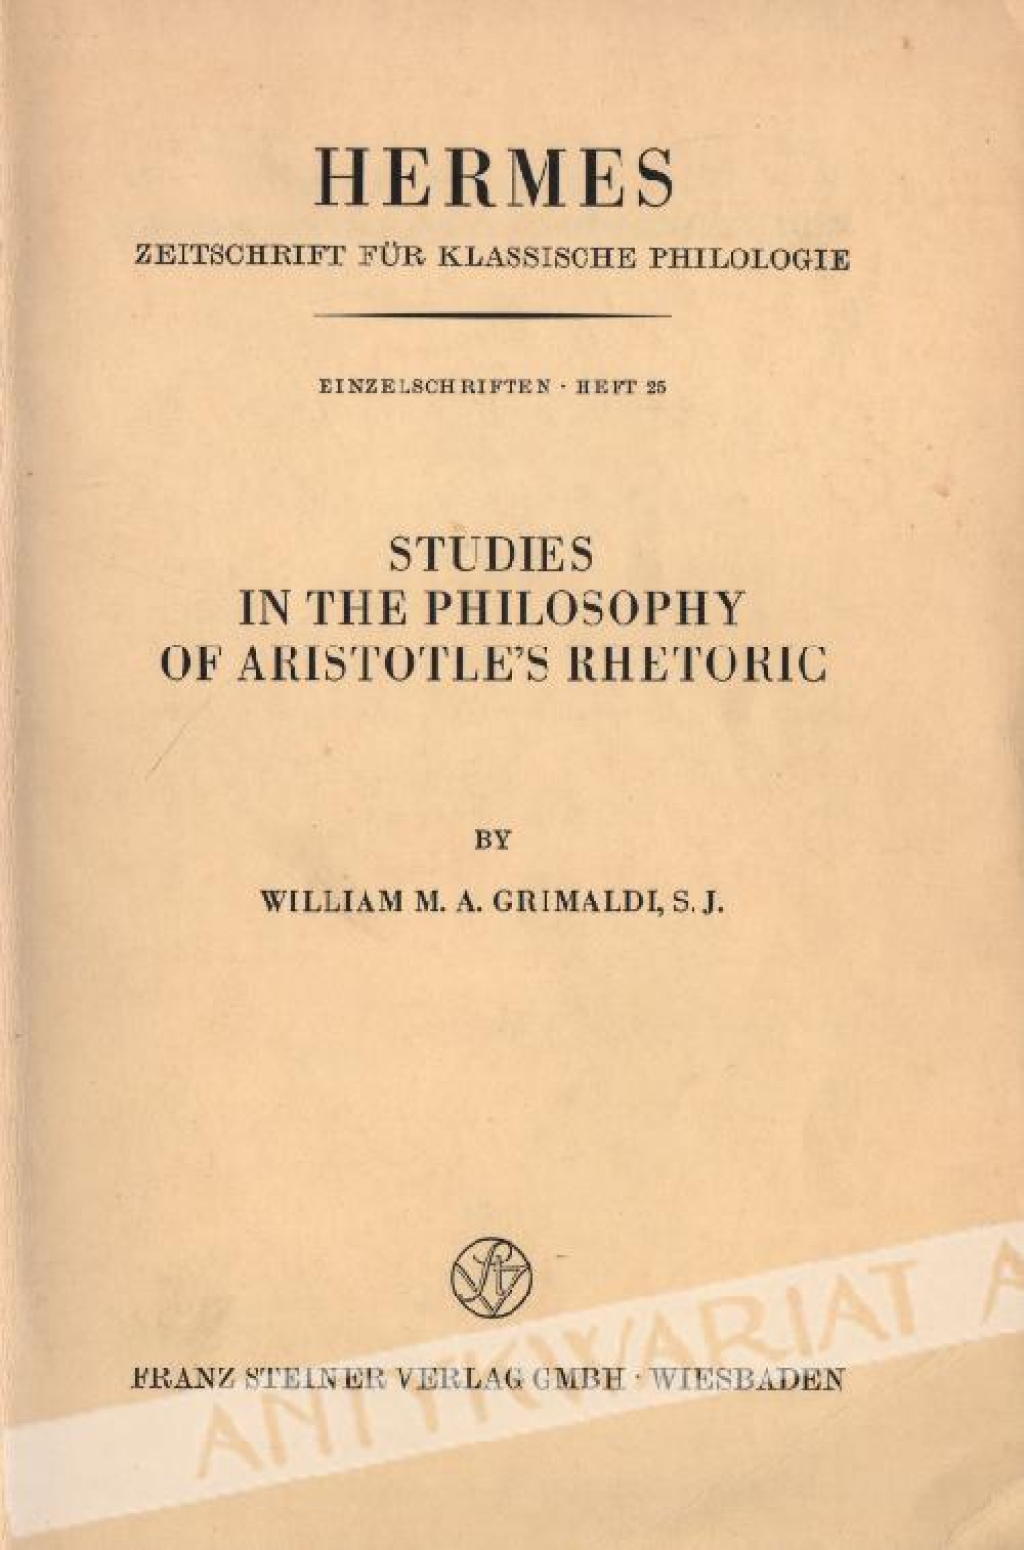 Studies in the Philosophy of Aristotle's Rhetoric